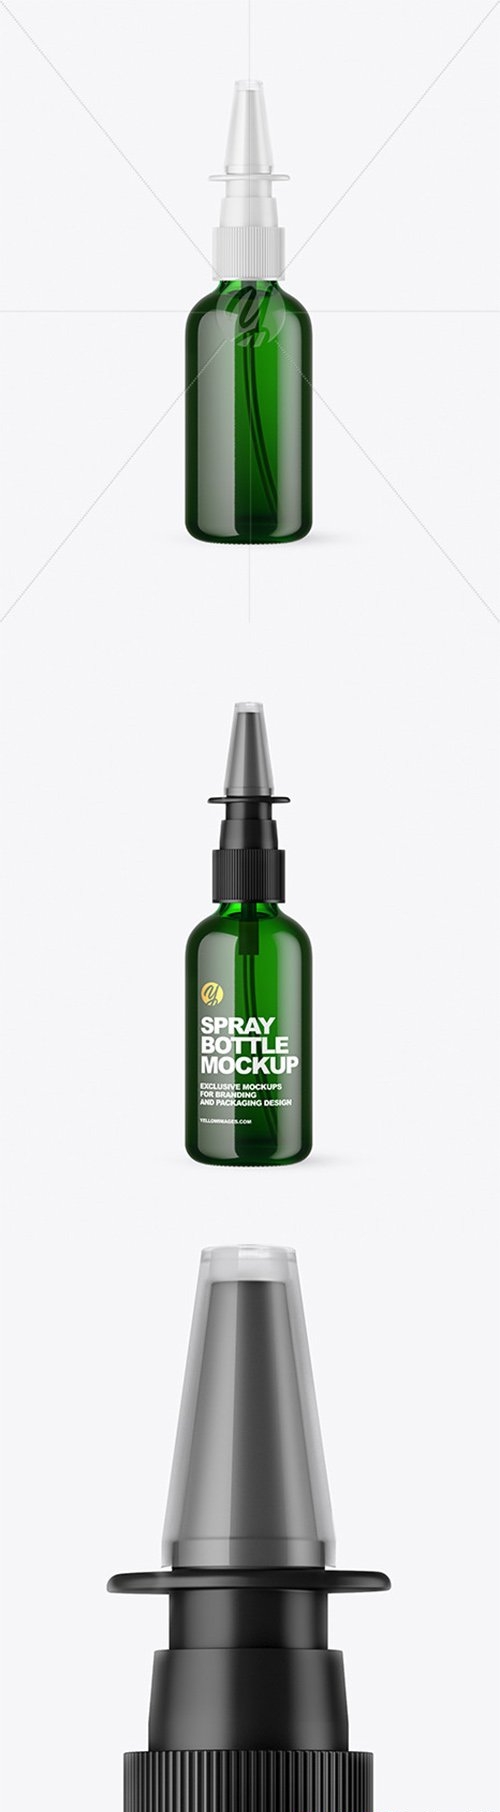 Green Glass Nasal Spray Bottle Mockup 66536